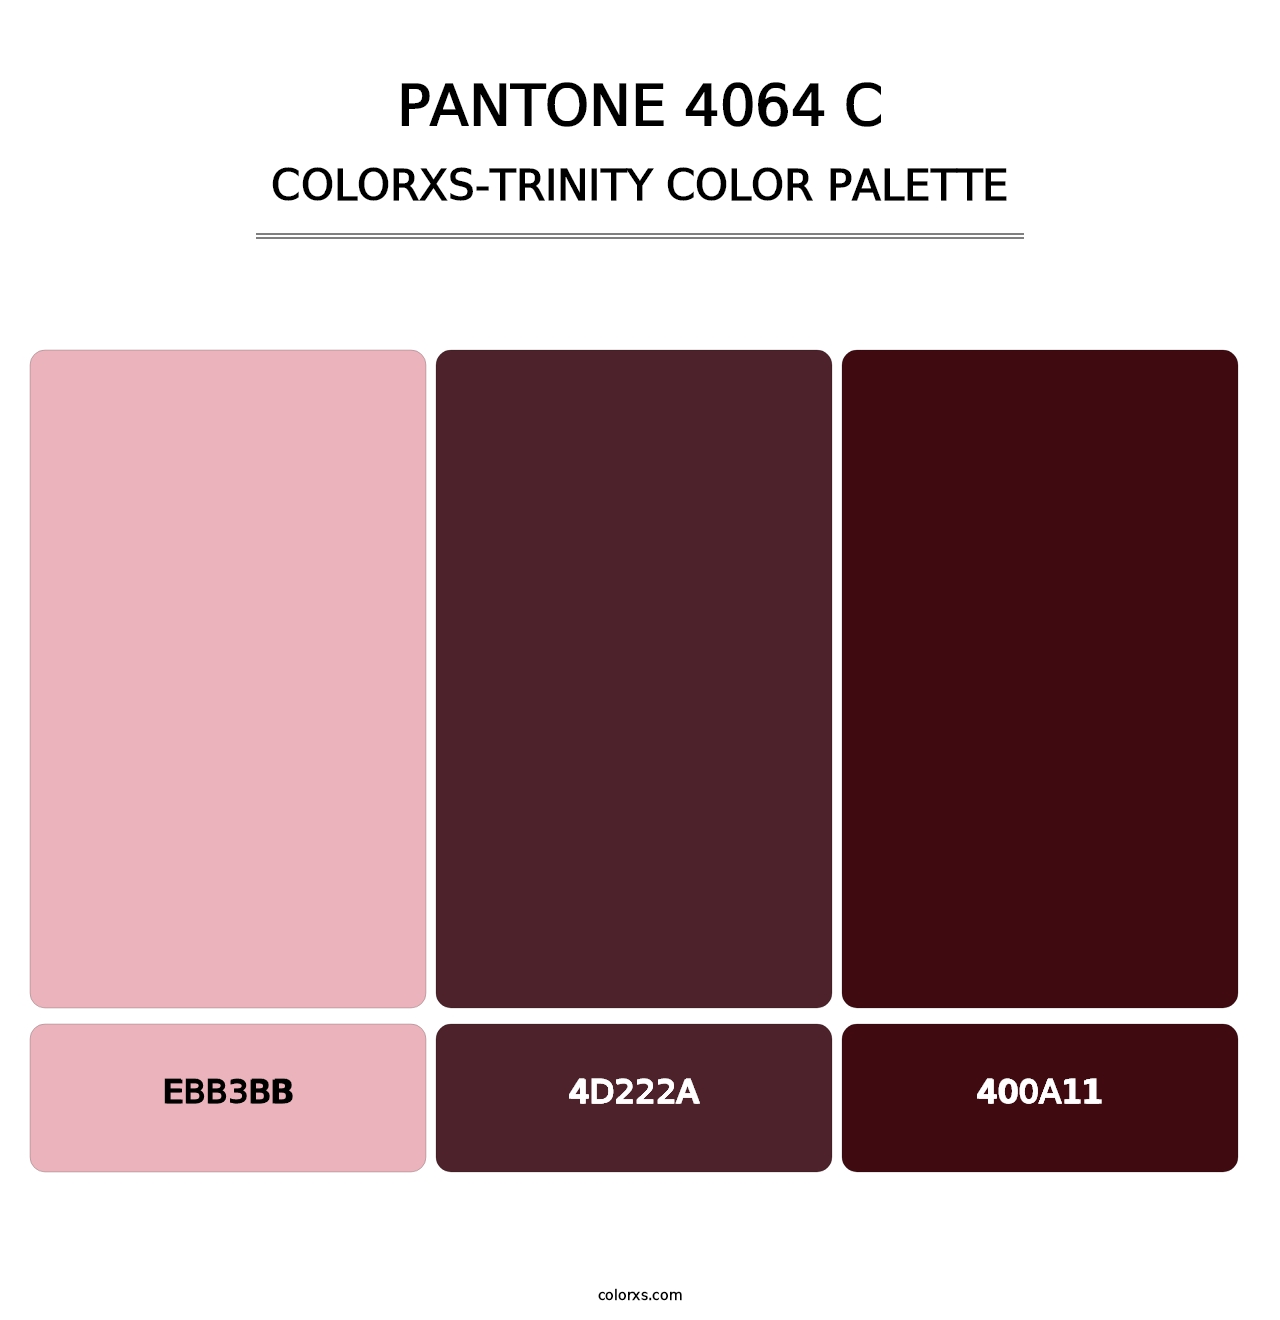 PANTONE 4064 C - Colorxs Trinity Palette